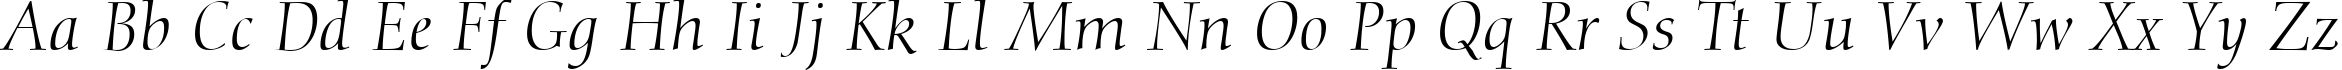 Пример написания английского алфавита шрифтом Calligraphic 810 Italic BT